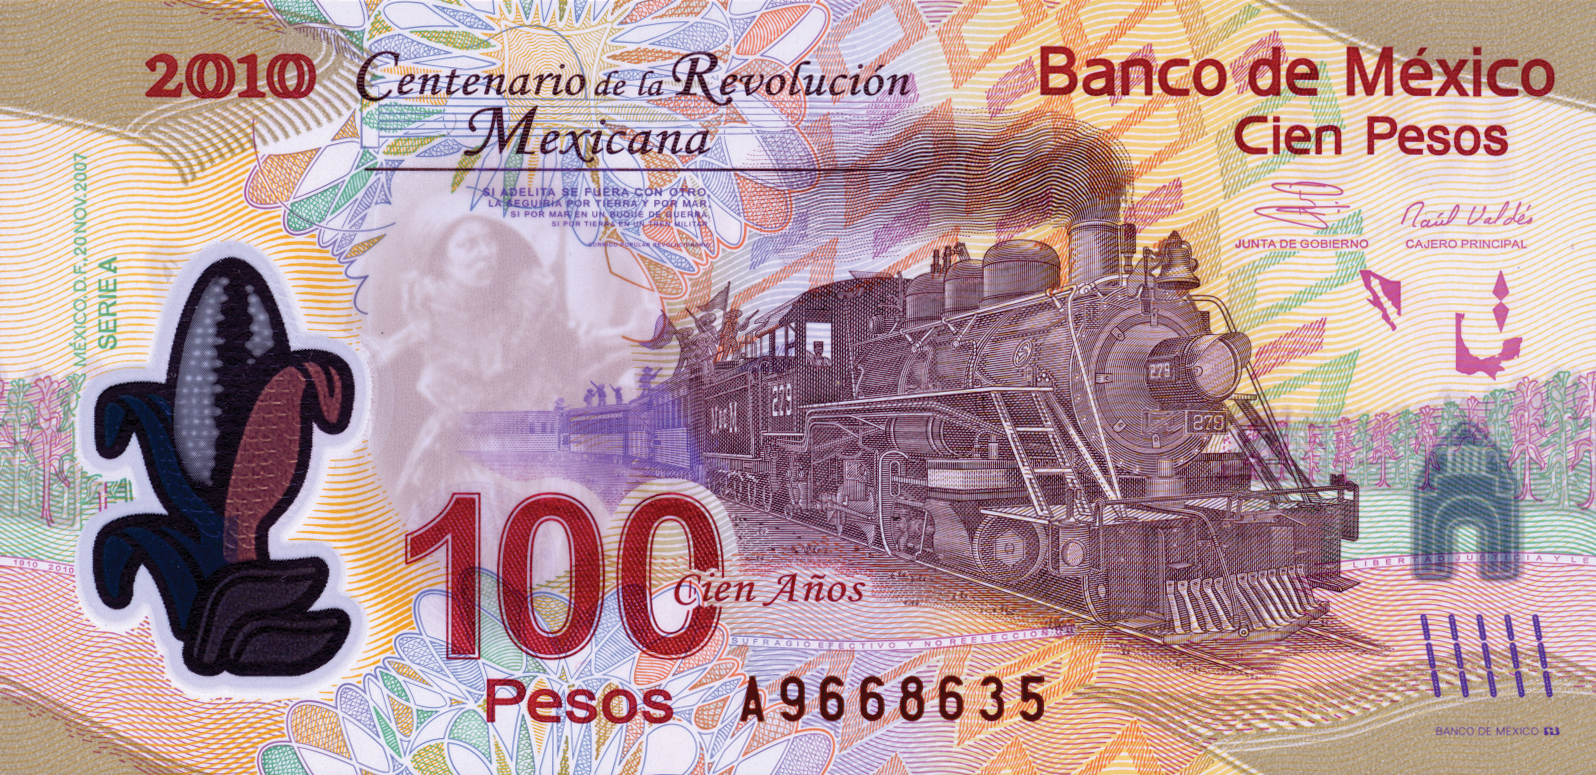 Details about   Banco de Mexico 100 Pesos NEW COMMEMORATIVE Banknote Centennial of Constitution, 